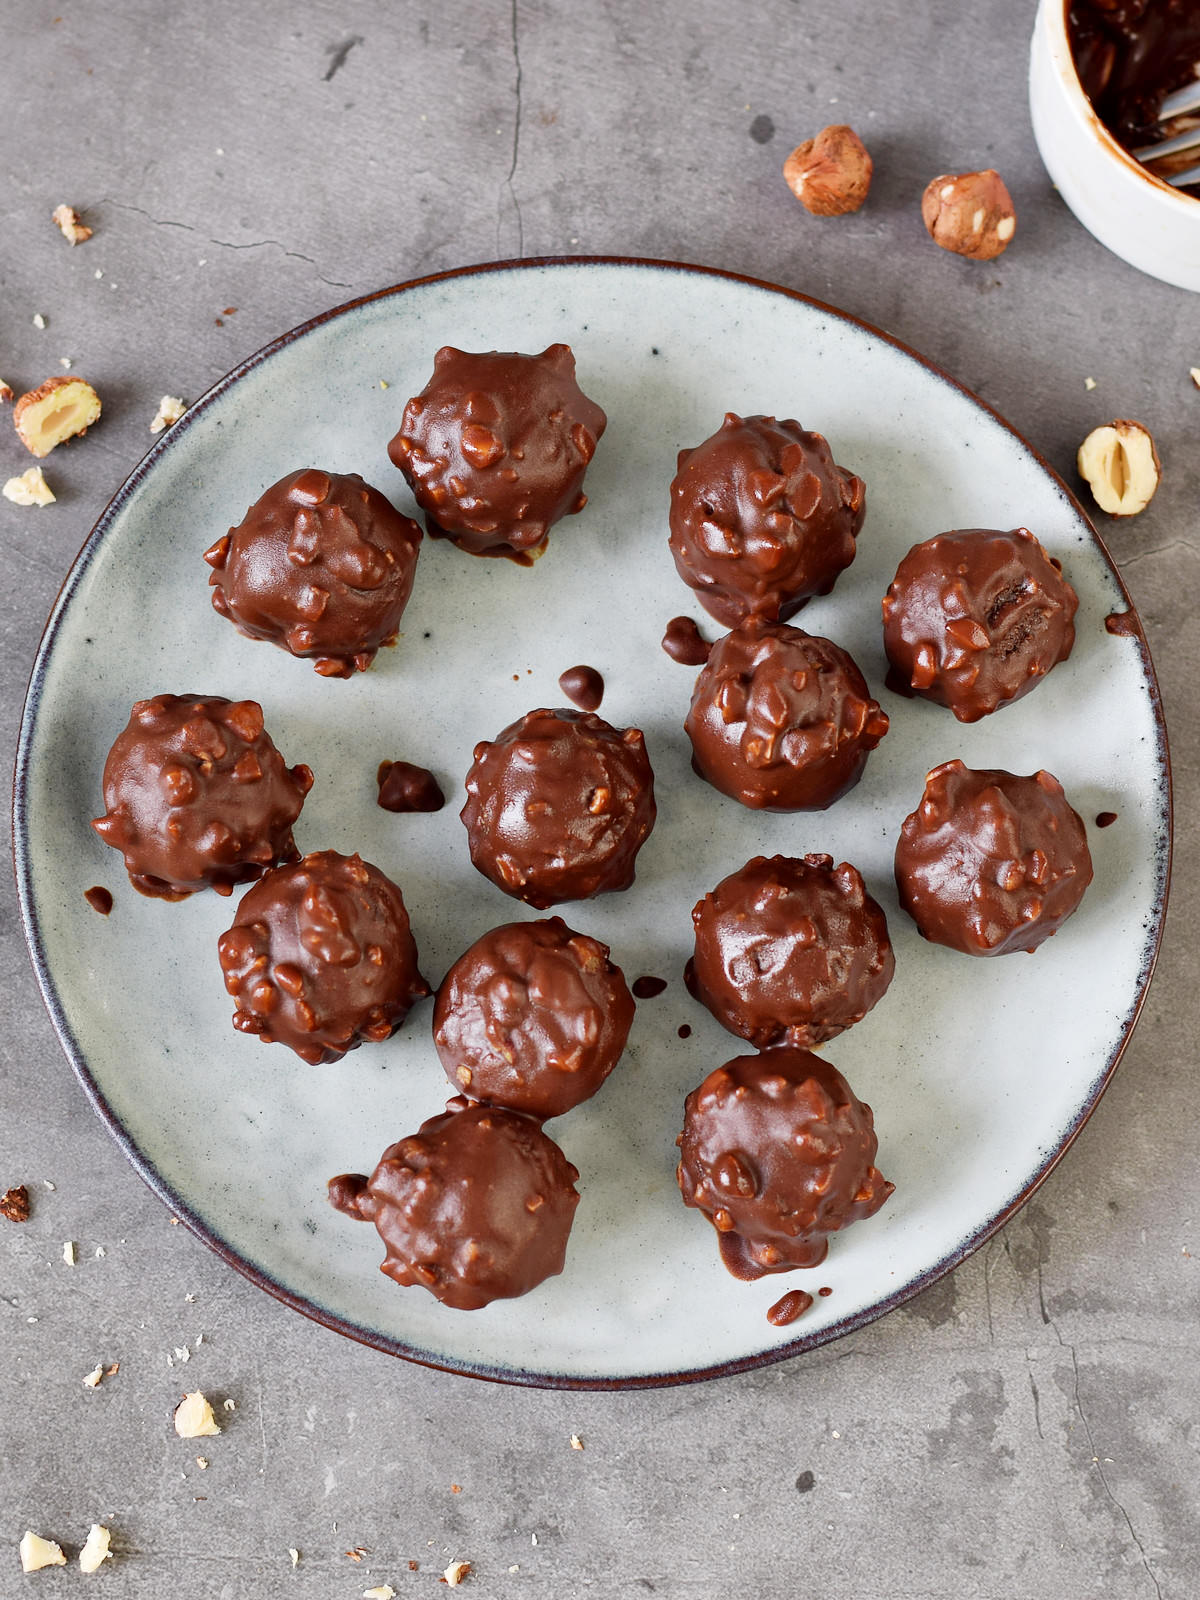 13 hazelnut chocolate balls on a plate